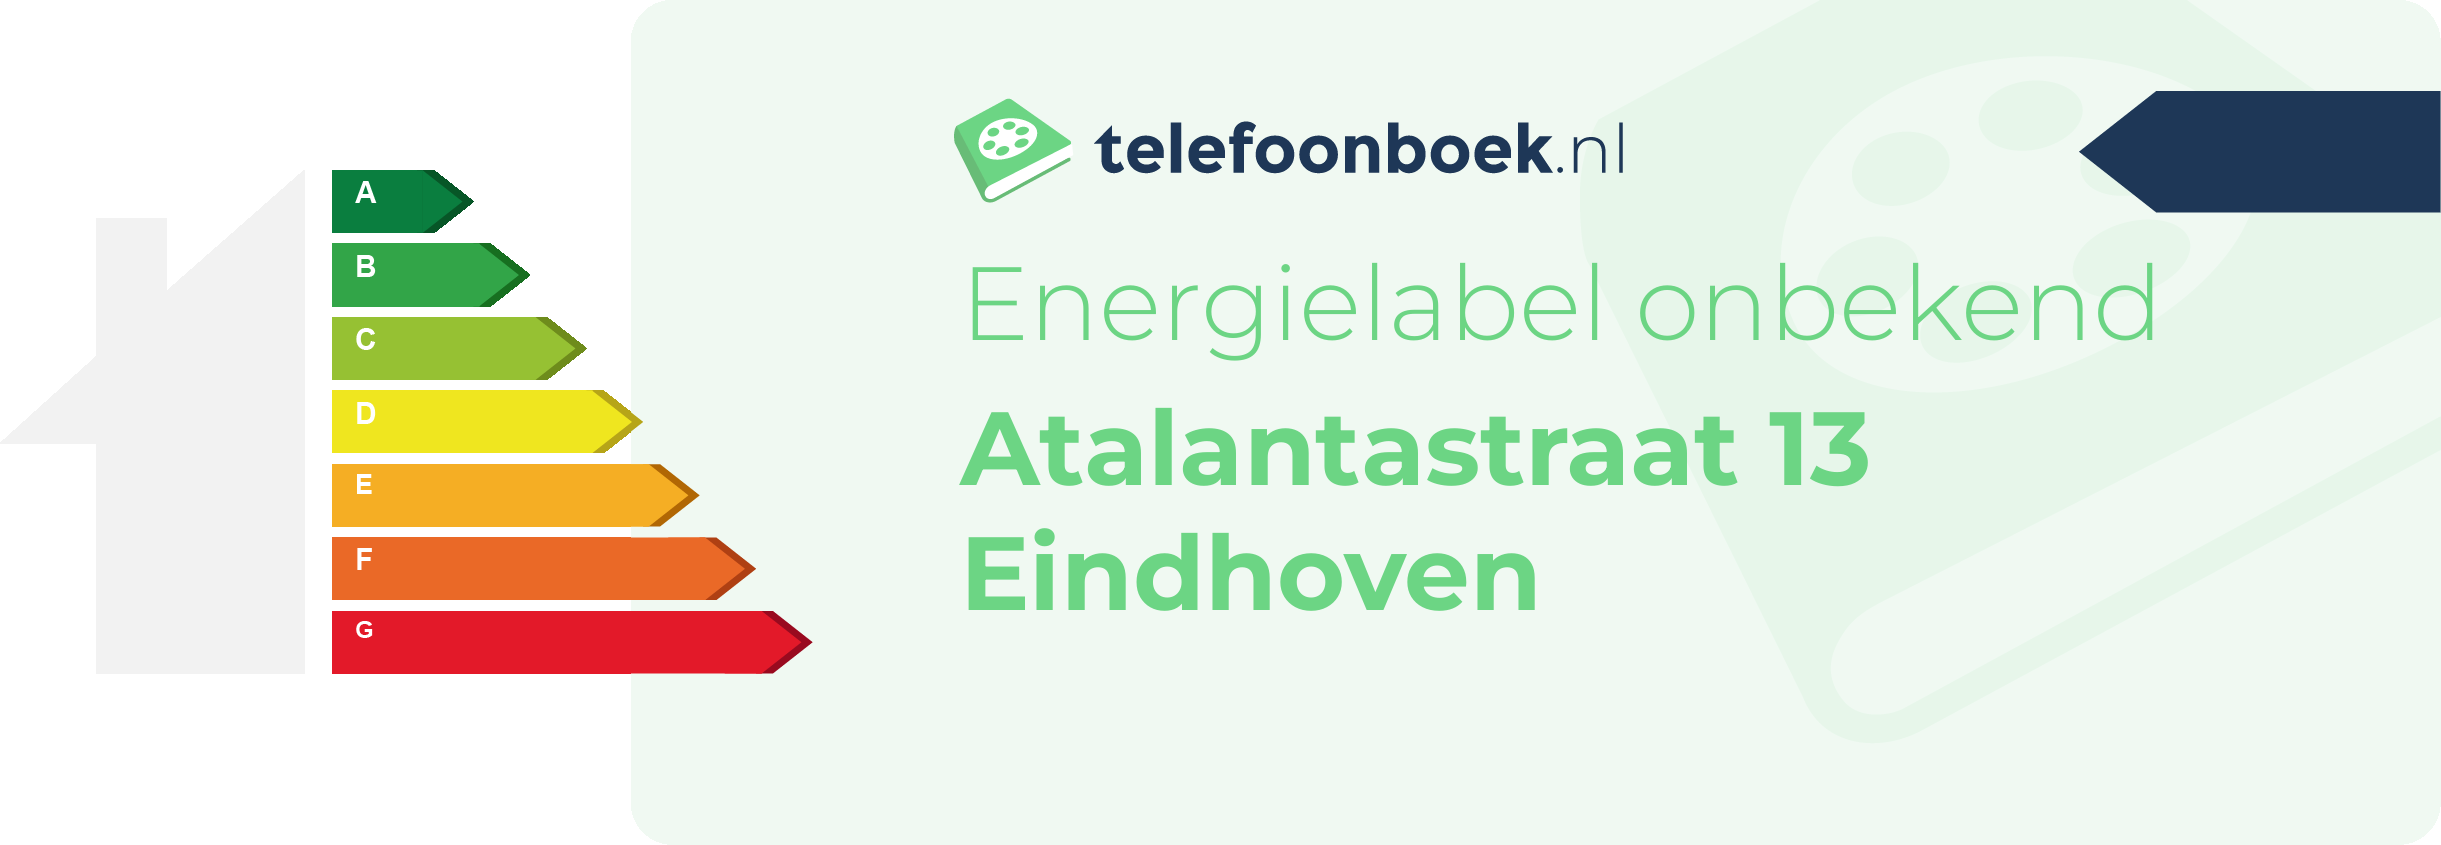 Energielabel Atalantastraat 13 Eindhoven